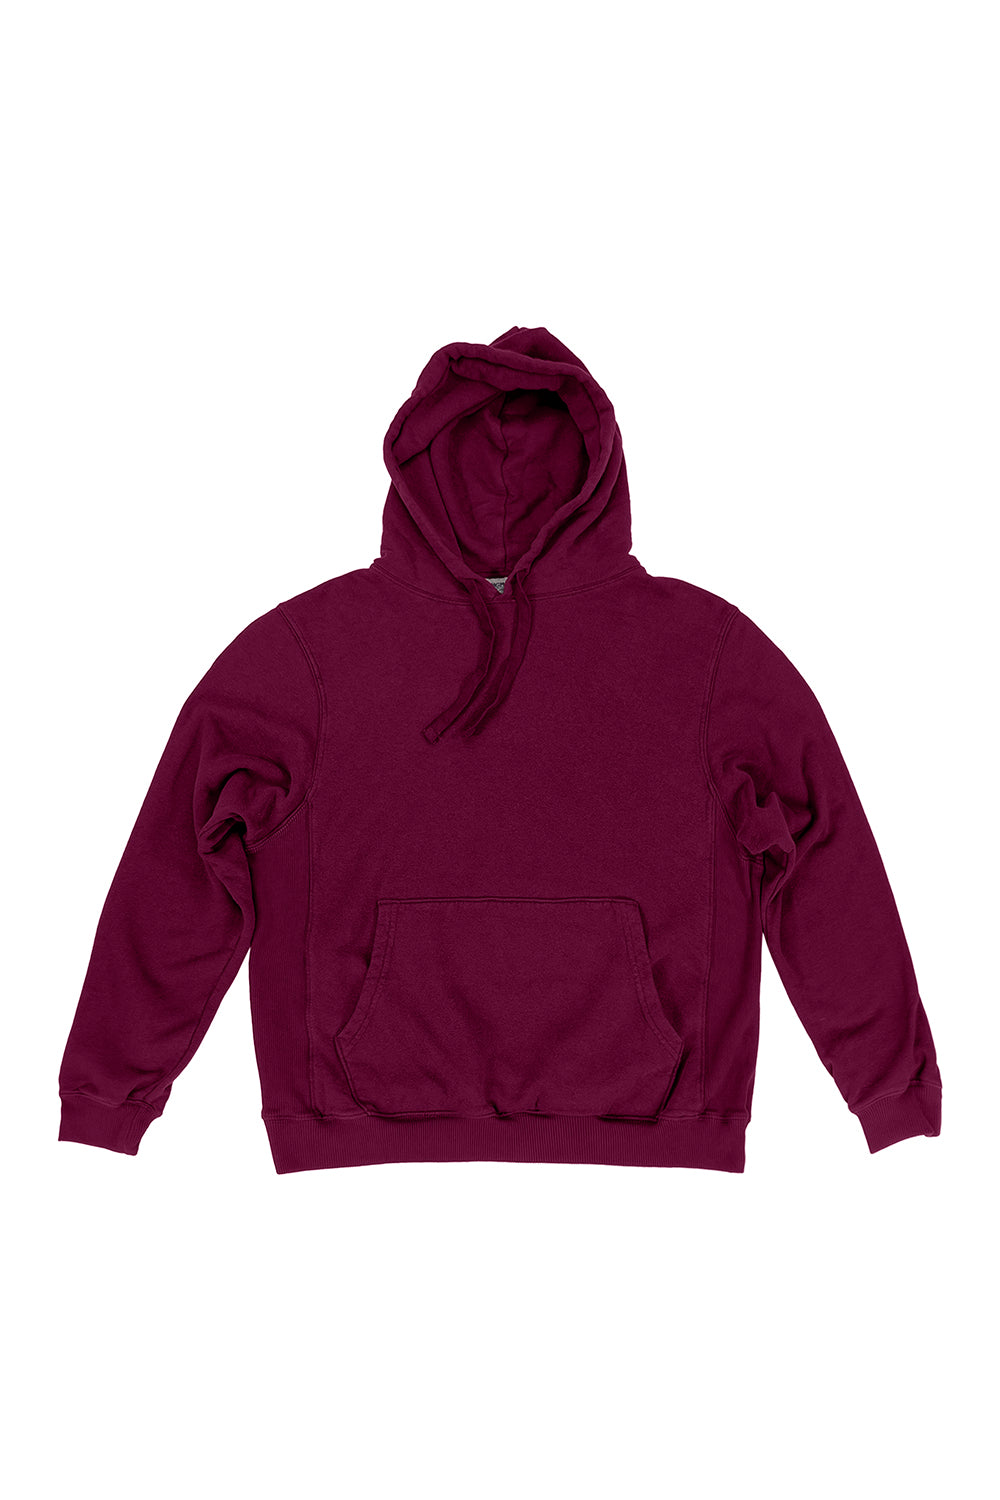 Montauk Hooded Sweatshirt | Jungmaven Hemp Clothing & Accessories / Color: Burgundy